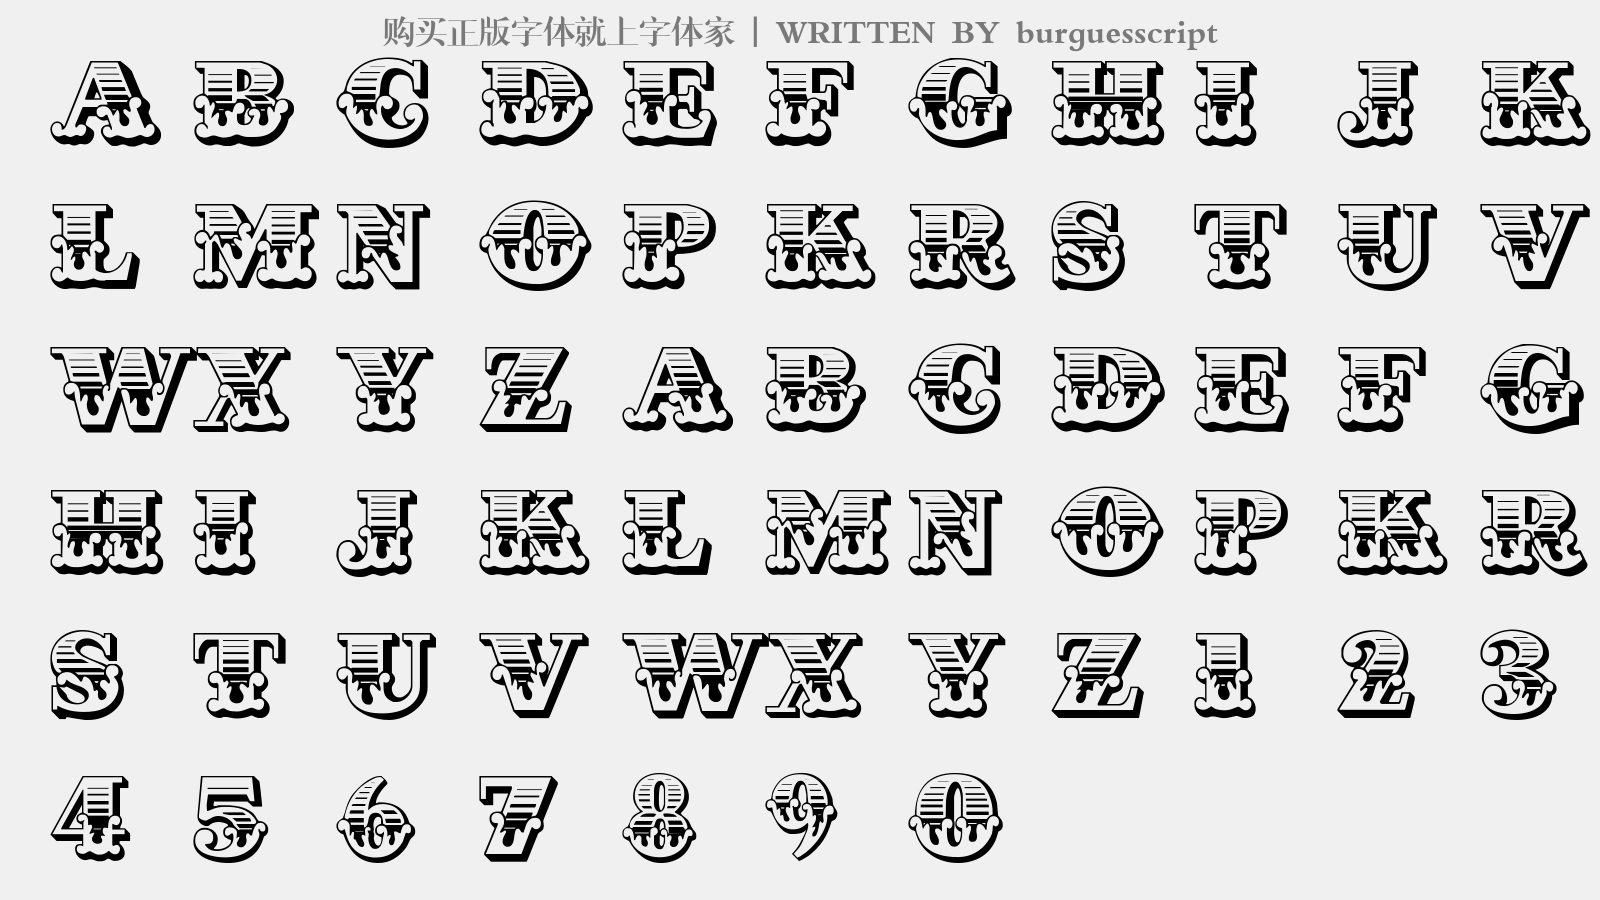 burguesscript - 大写字母/小写字母/数字